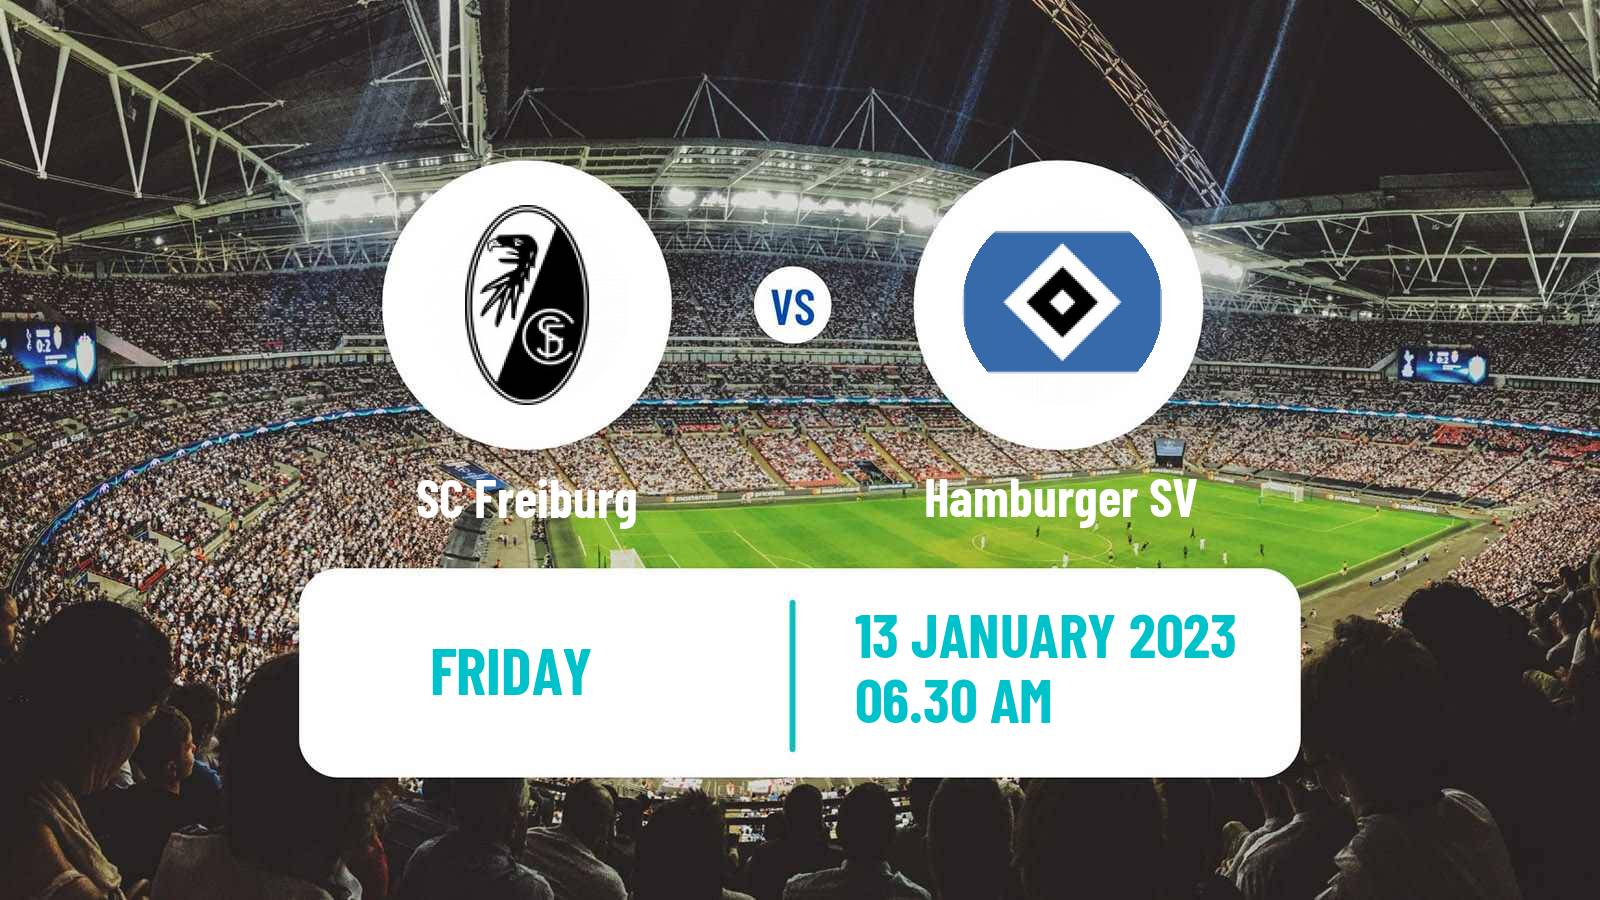 Soccer Club Friendly Freiburg - Hamburger SV